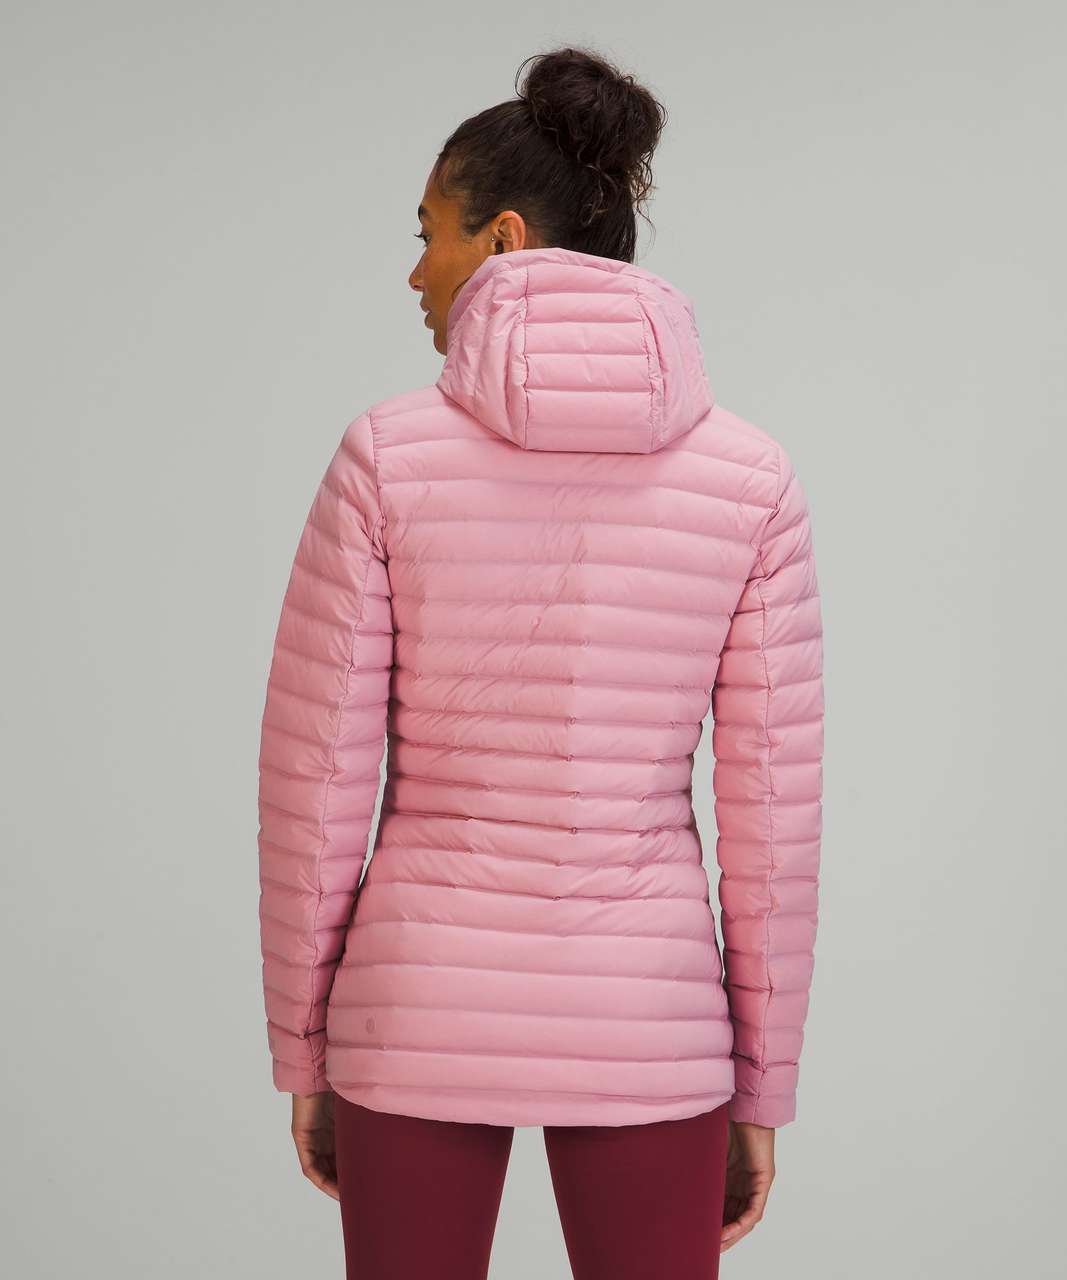 Lululemon Pack It Down Jacket - Pink Taupe